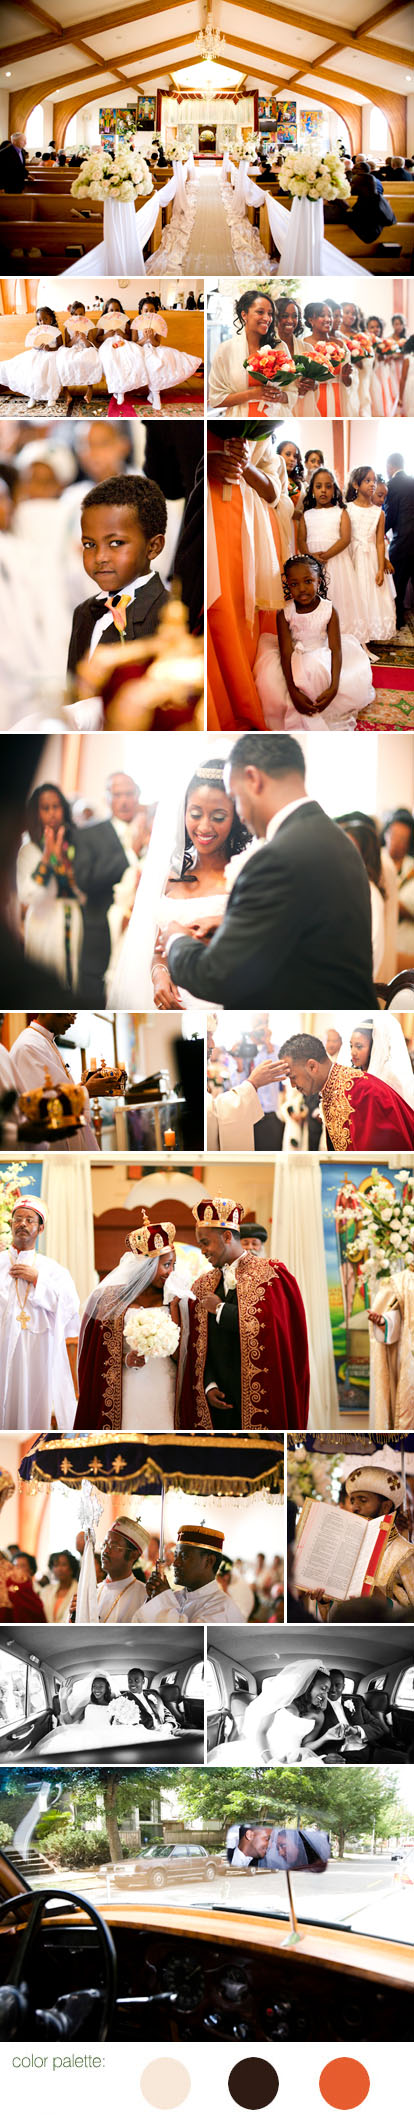 John and Joseph Photography, traditional Ethiopian Orthodox wedding ceremony, orange, gold and cream wedding color palette